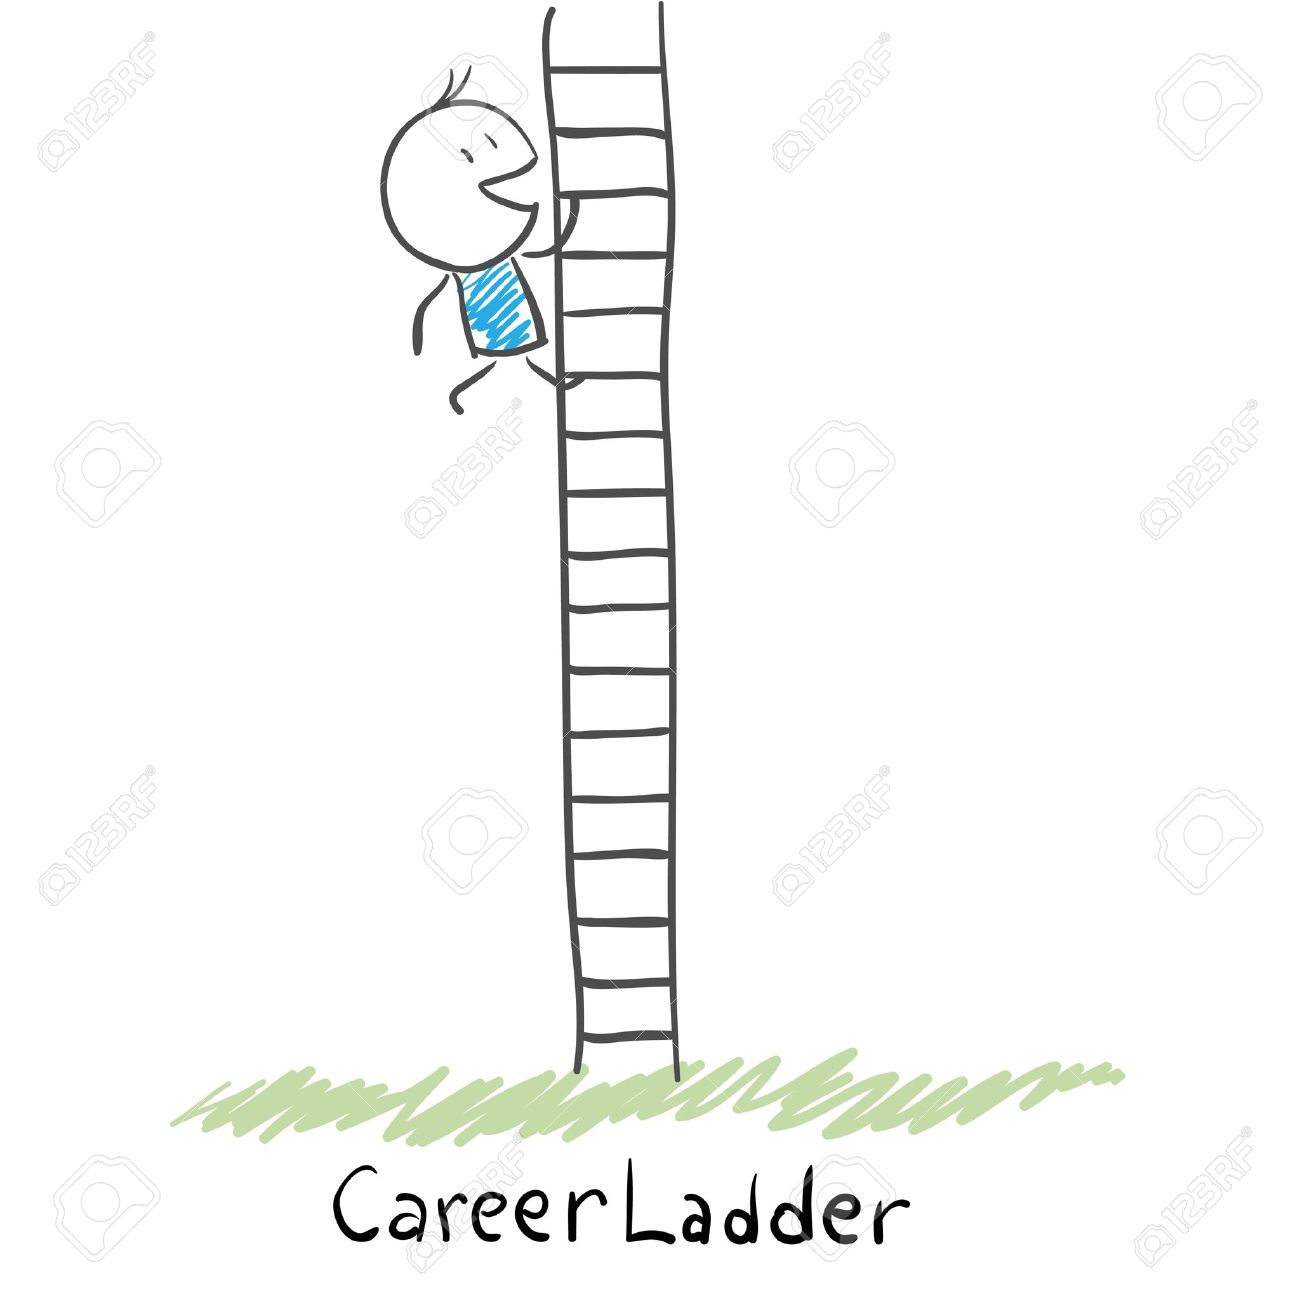 path clipart career ladder